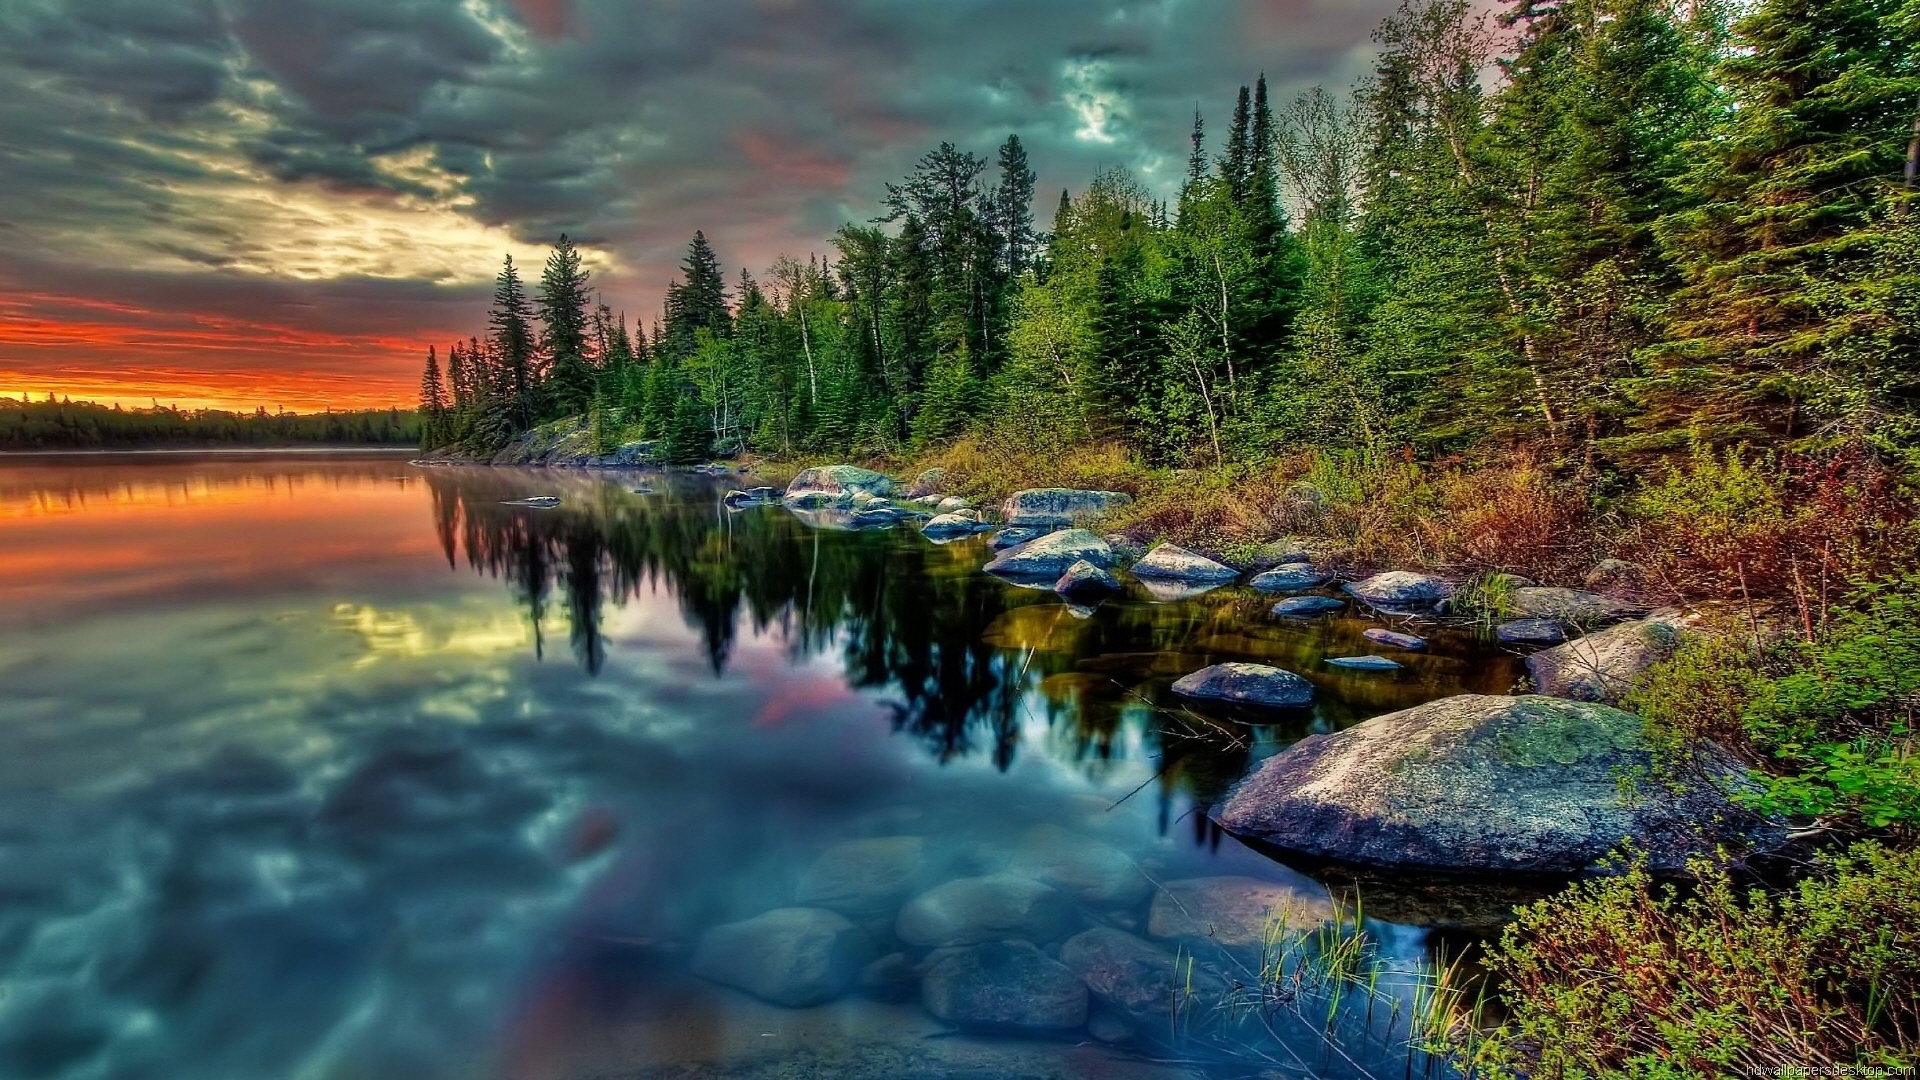 Aqua skies - Rivers & Nature Background Wallpapers on Desktop Nexus (Image  591730)